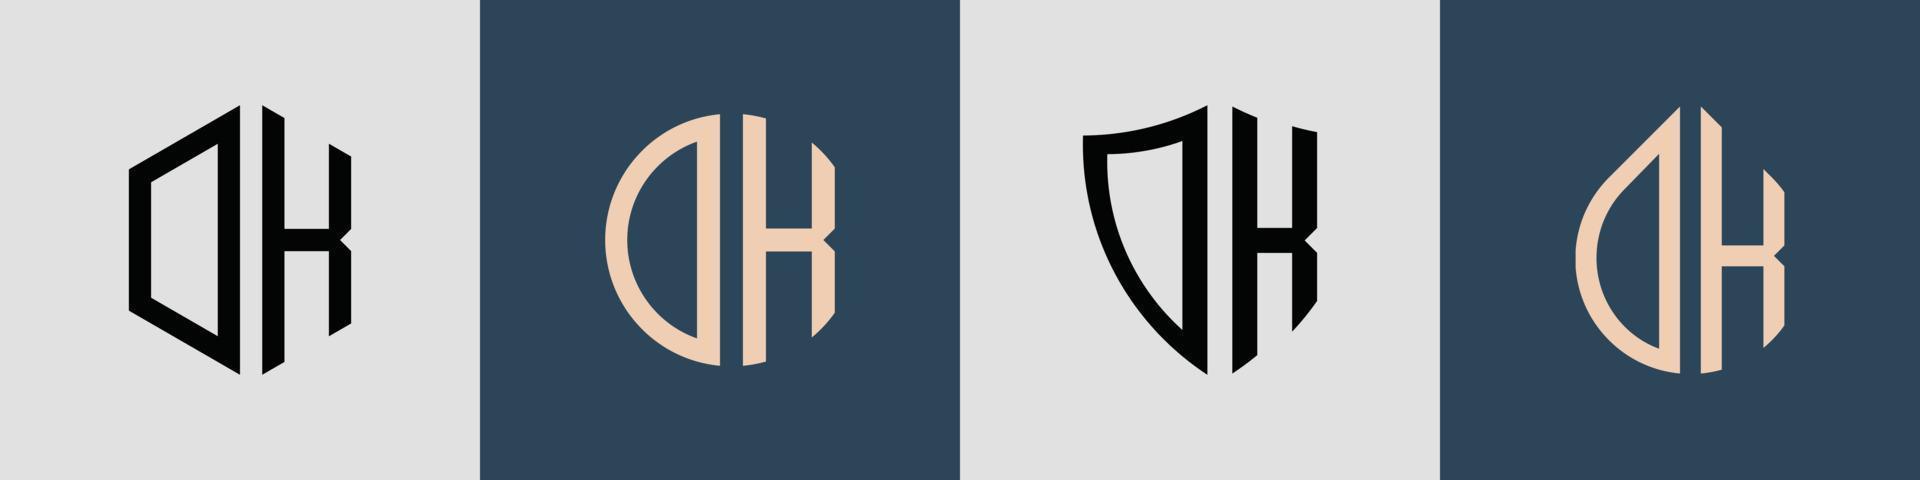 kreative einfache anfangsbuchstaben dk-logo-designs paket. vektor